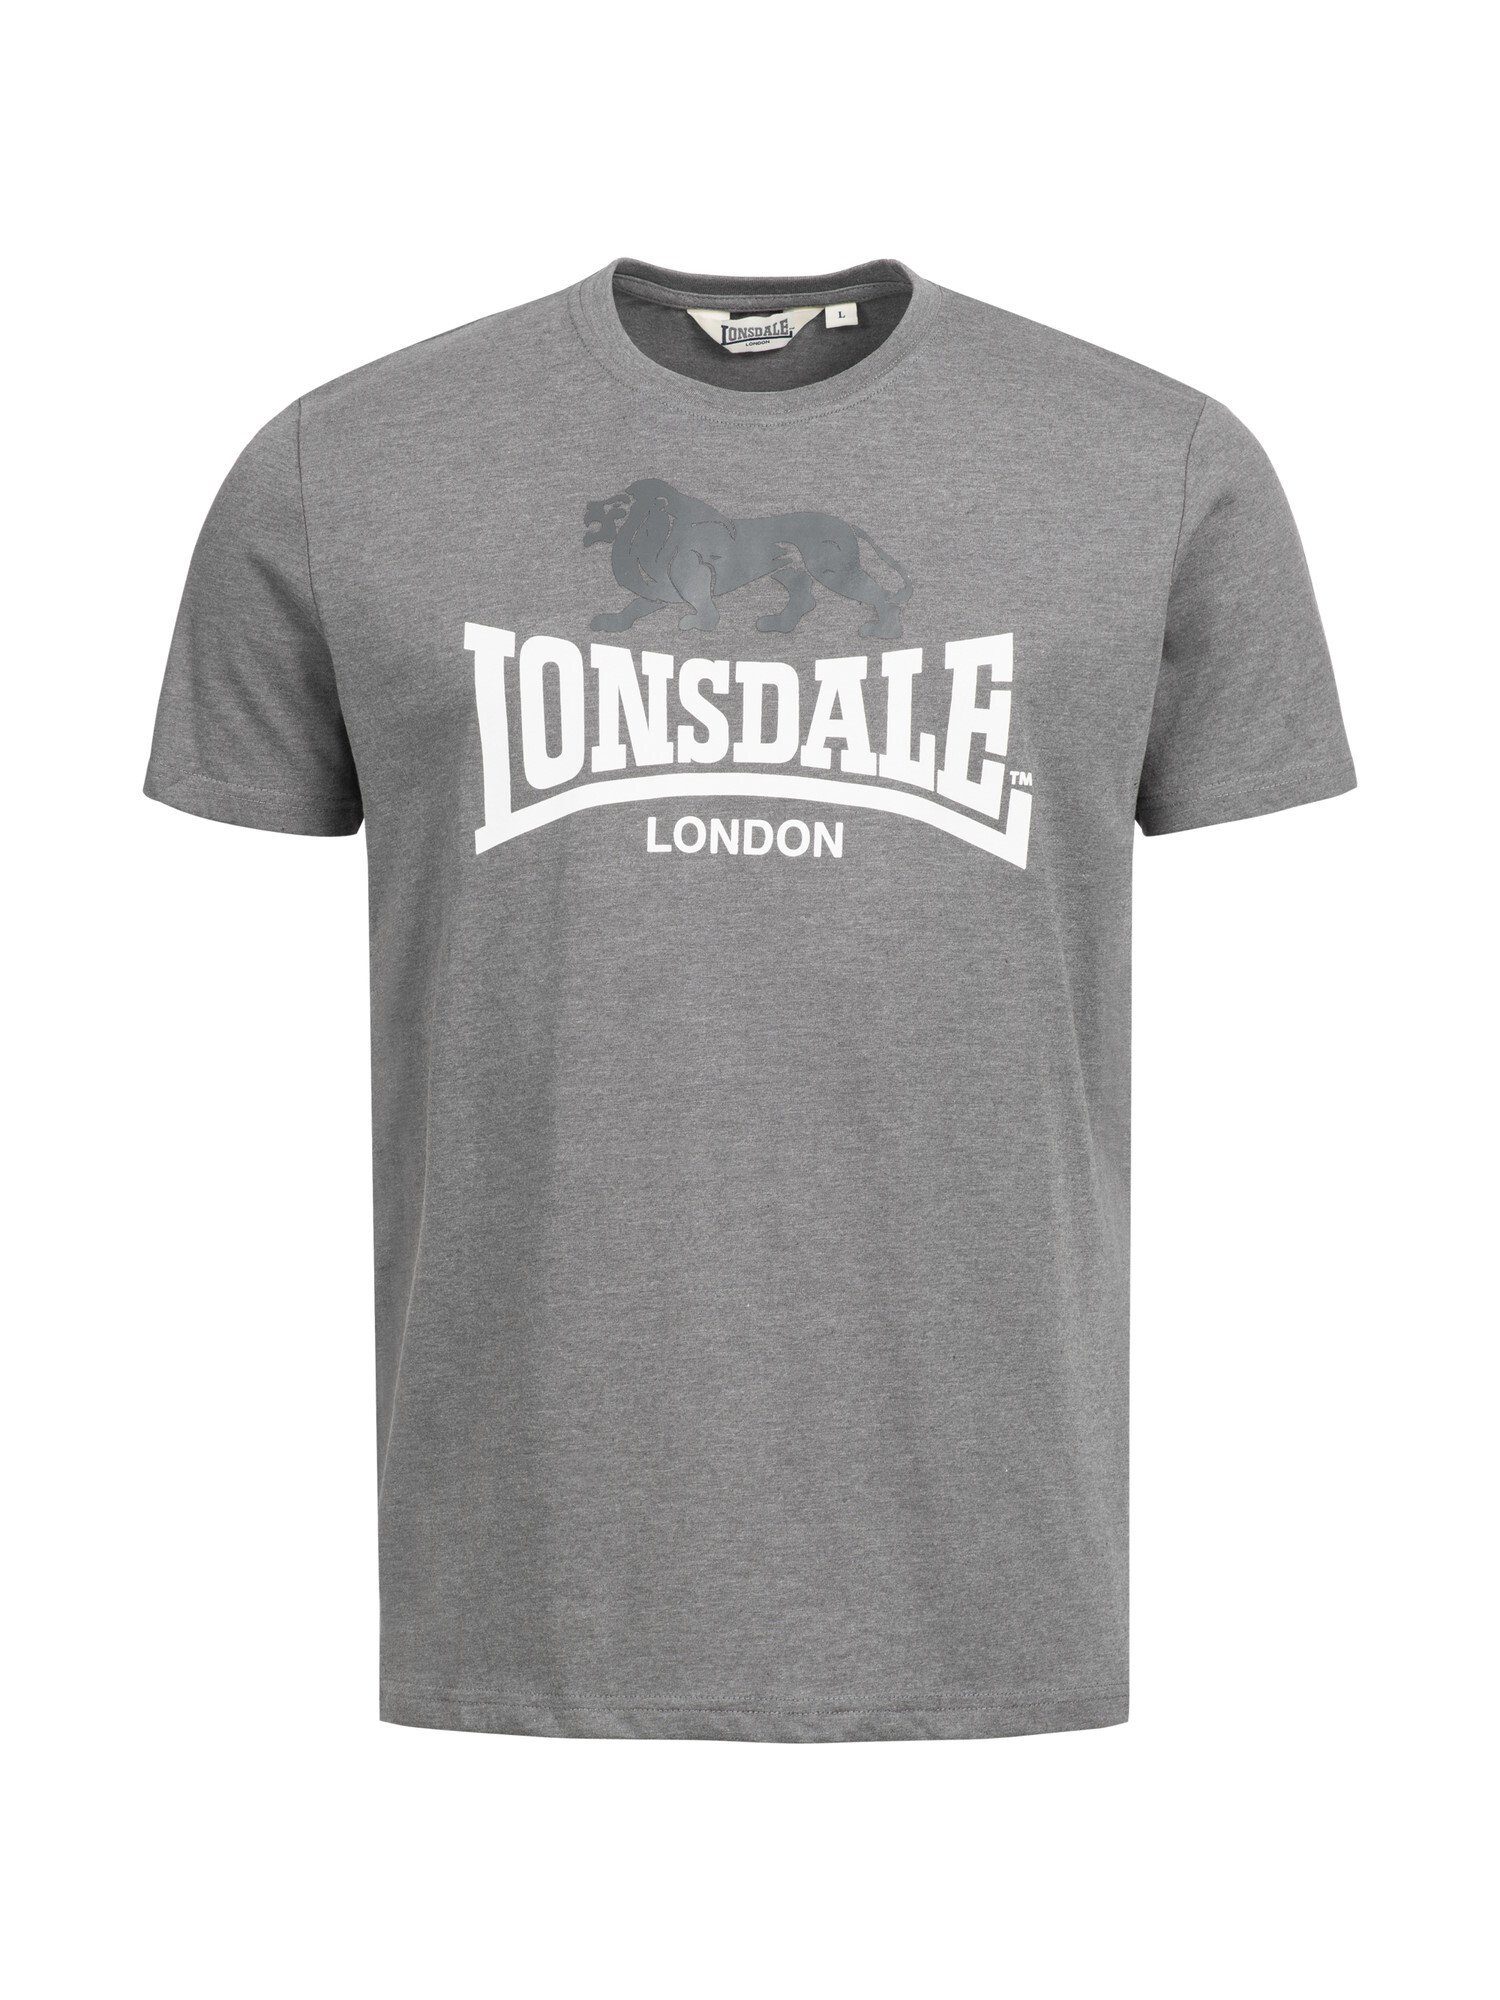 Kurzarm-T-Shirt T-Shirt grau GARGRAVE Shirt Lonsdale mit